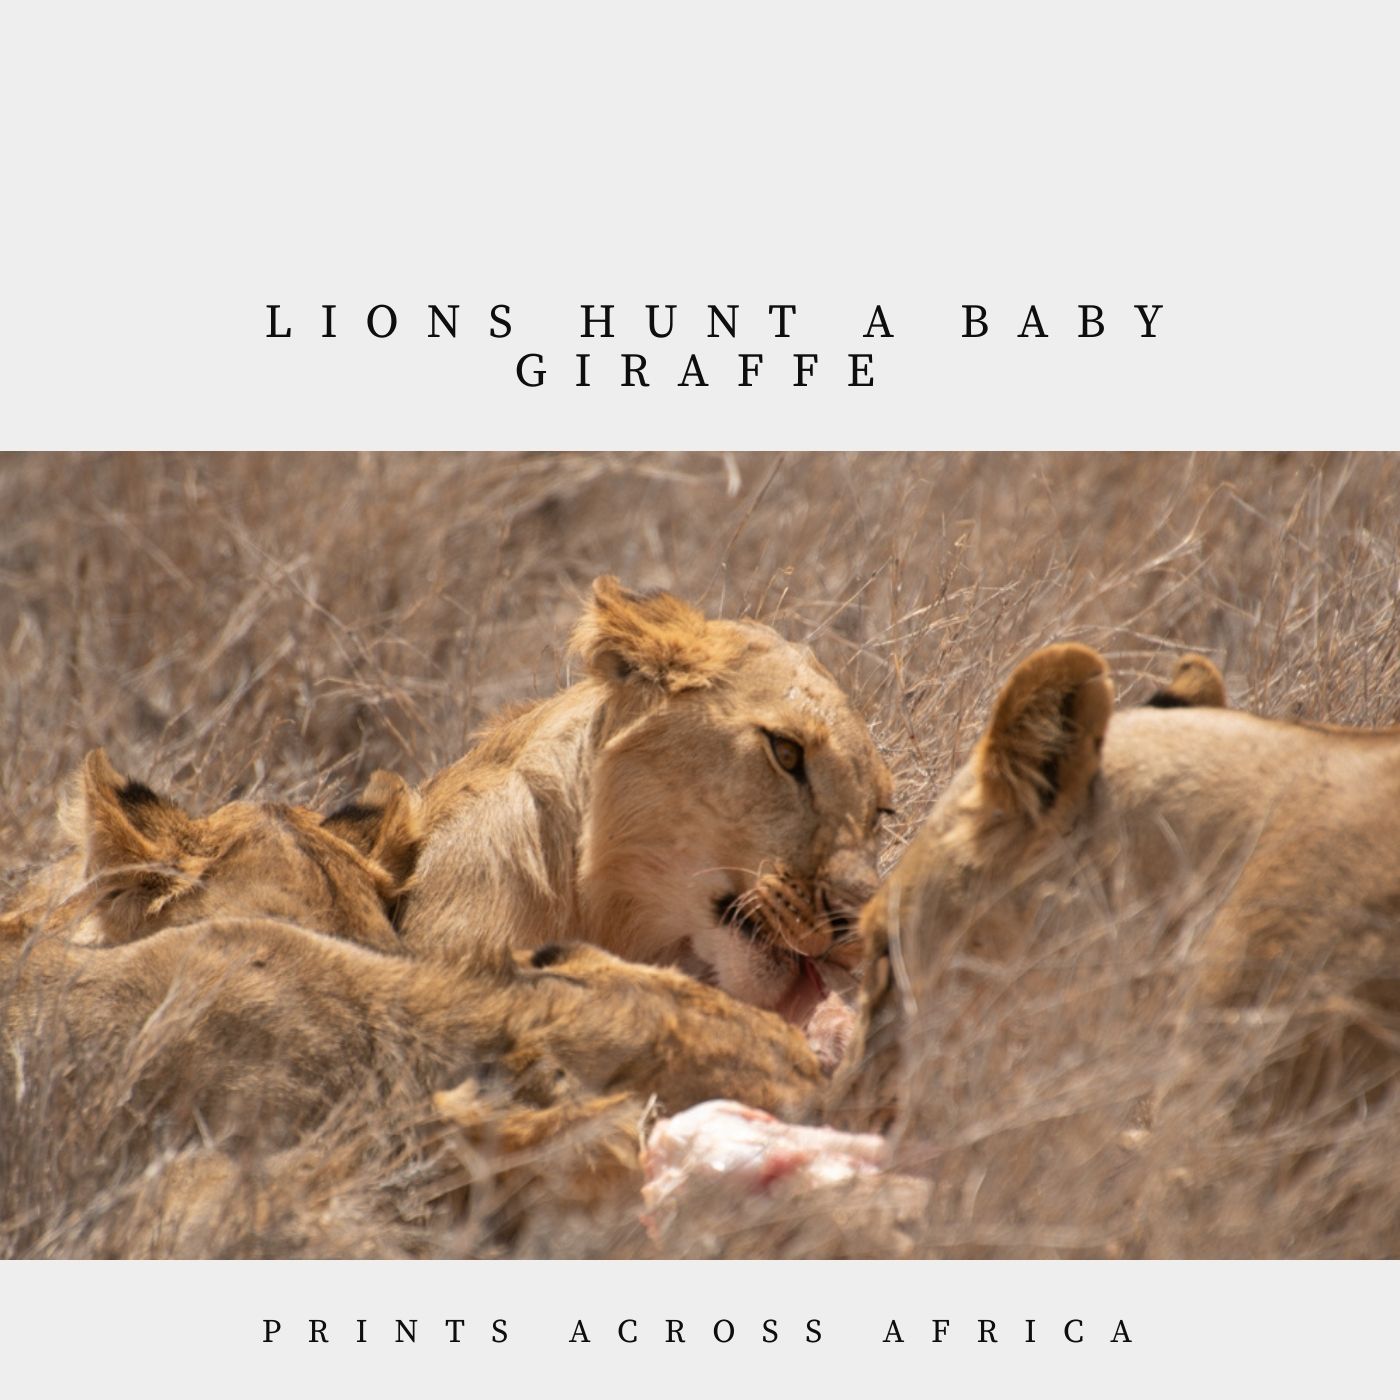 Lions hunt a baby giraffe